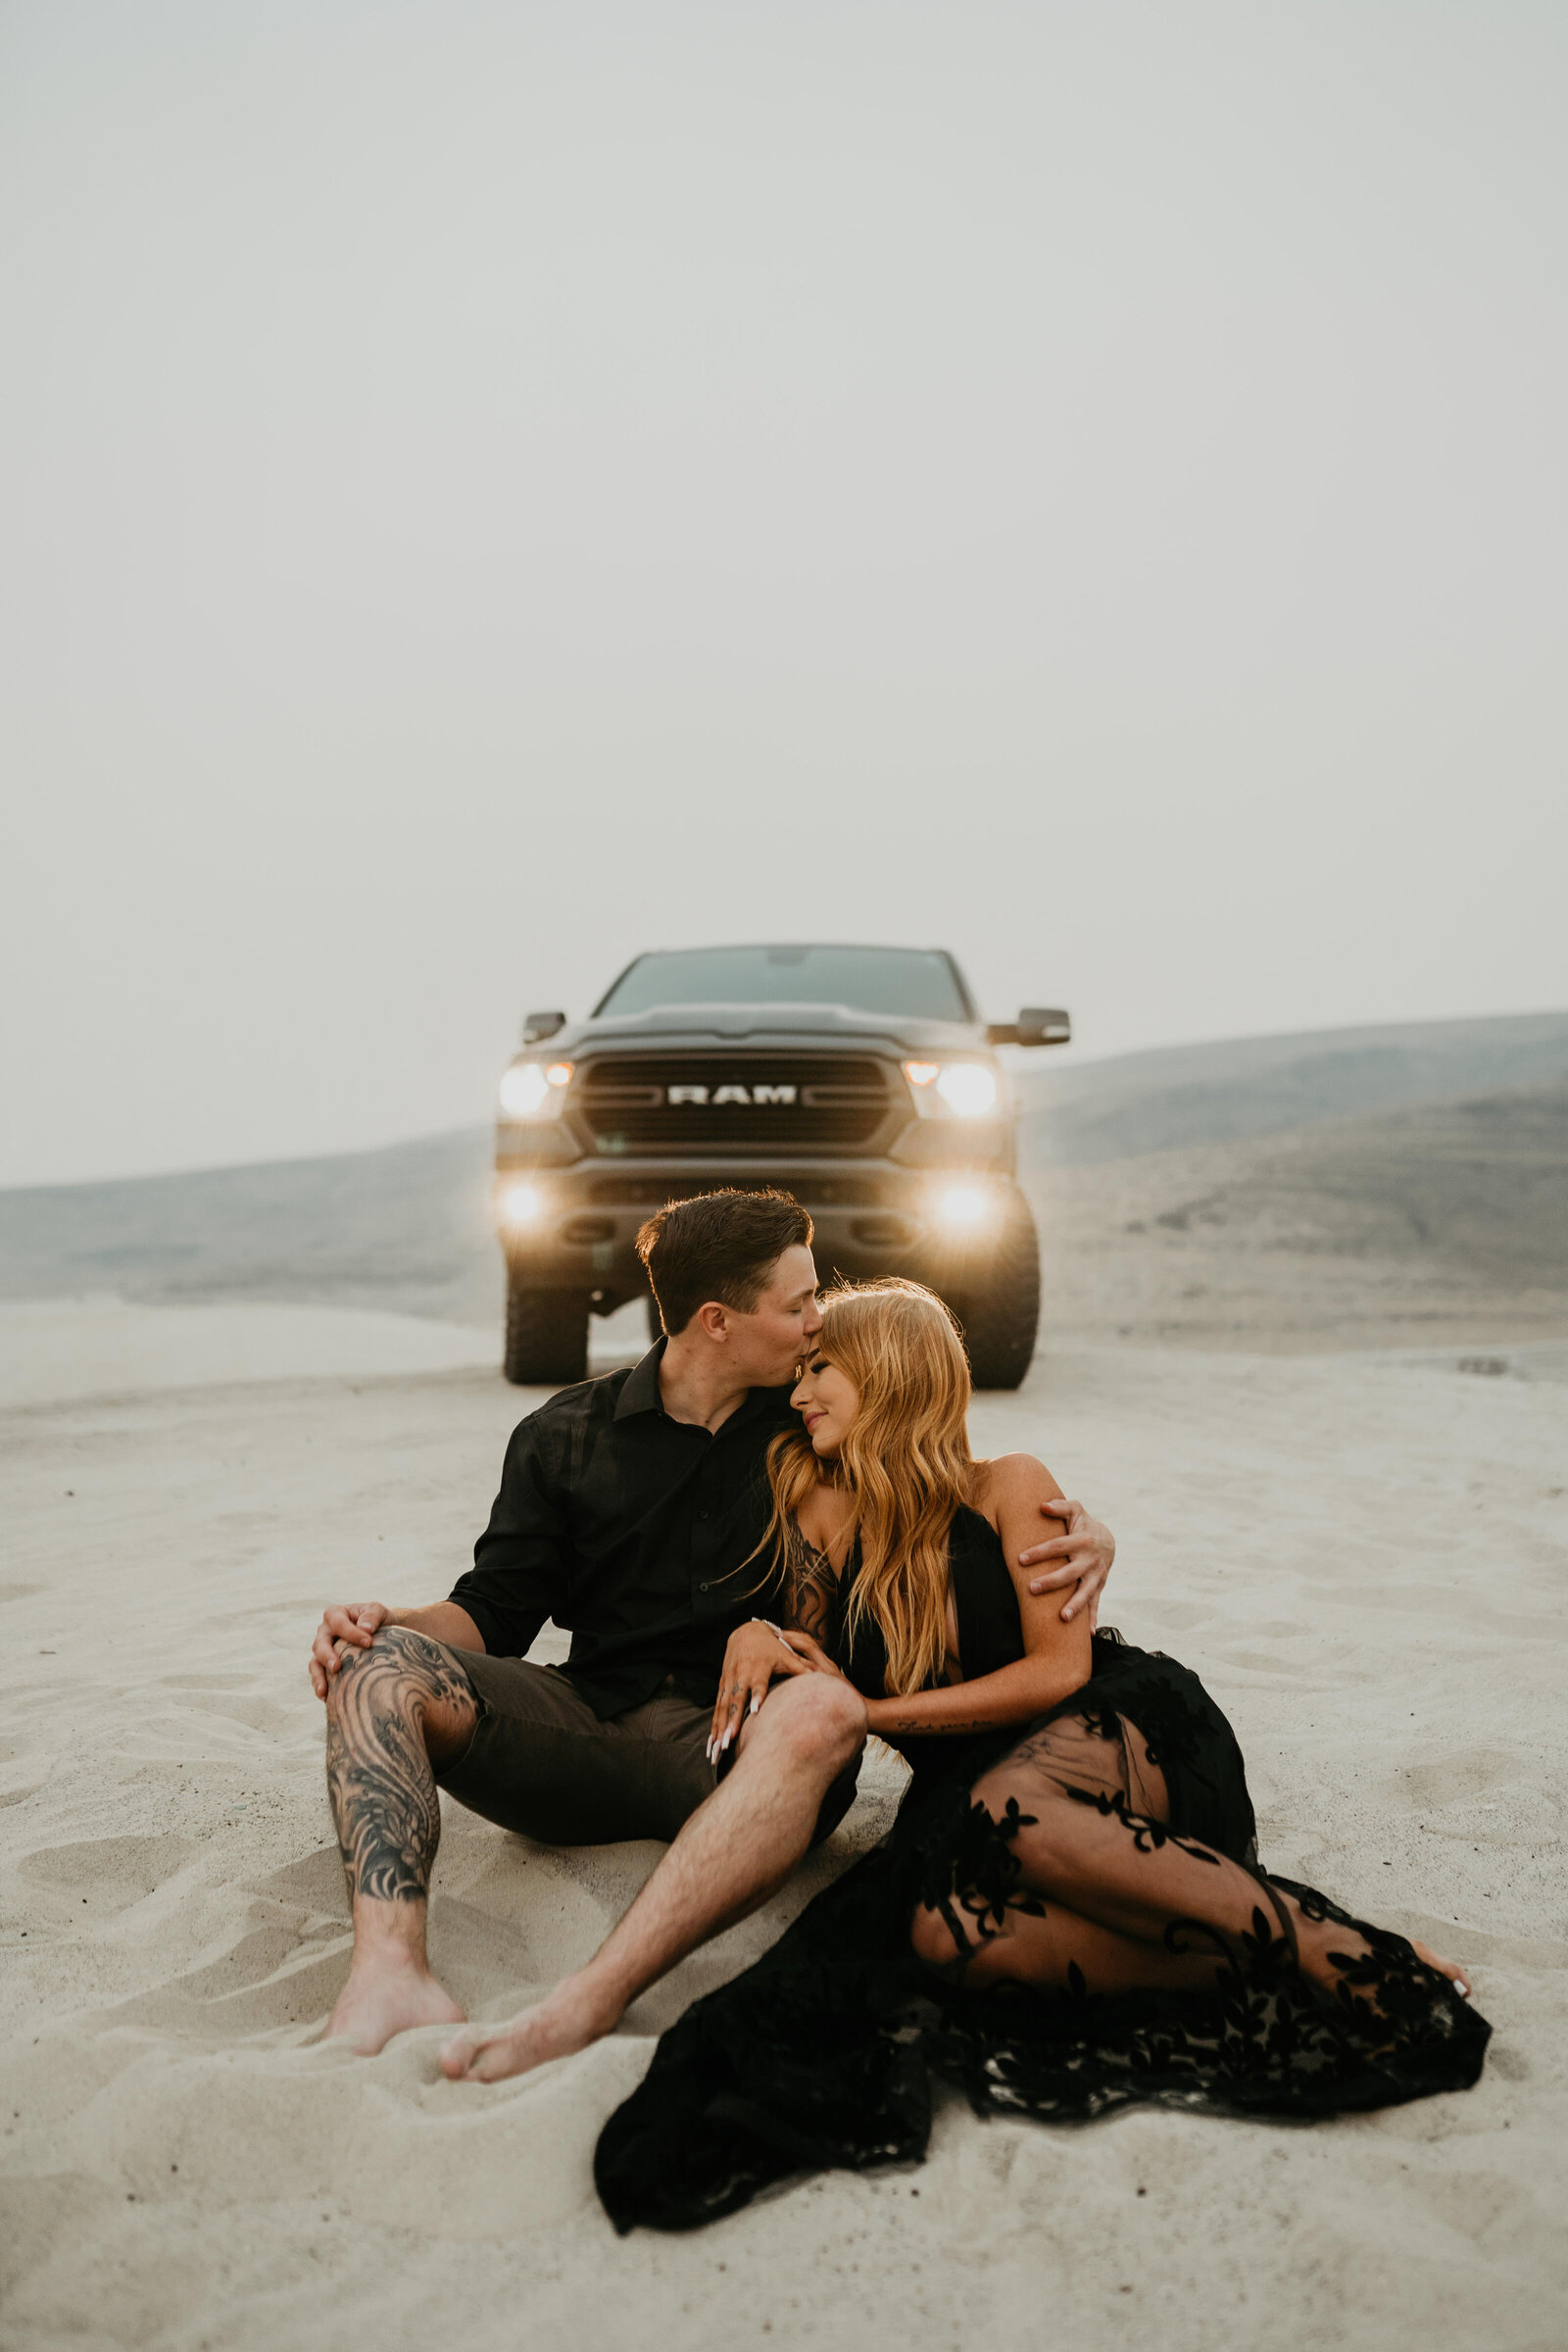 Sand Dunes Couples Photos - Raquel King Photography77